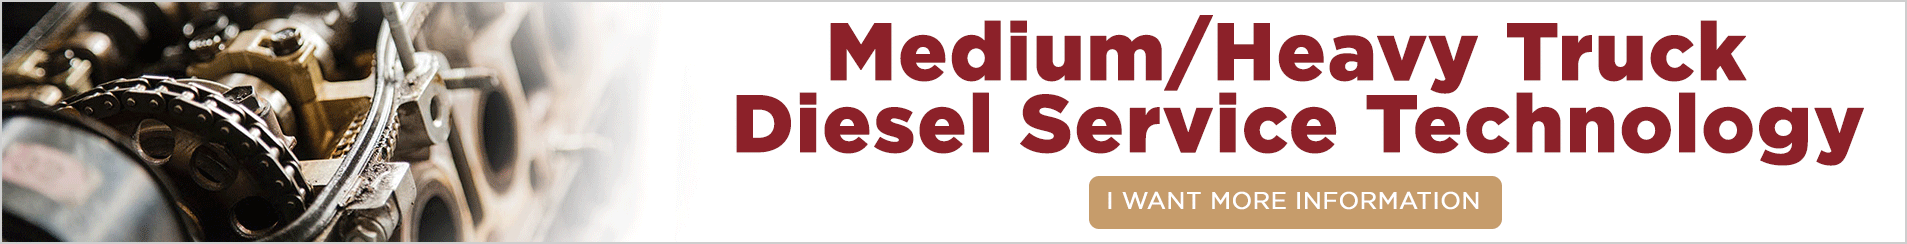 Medium/Heavy Truck Diesel Service Technology